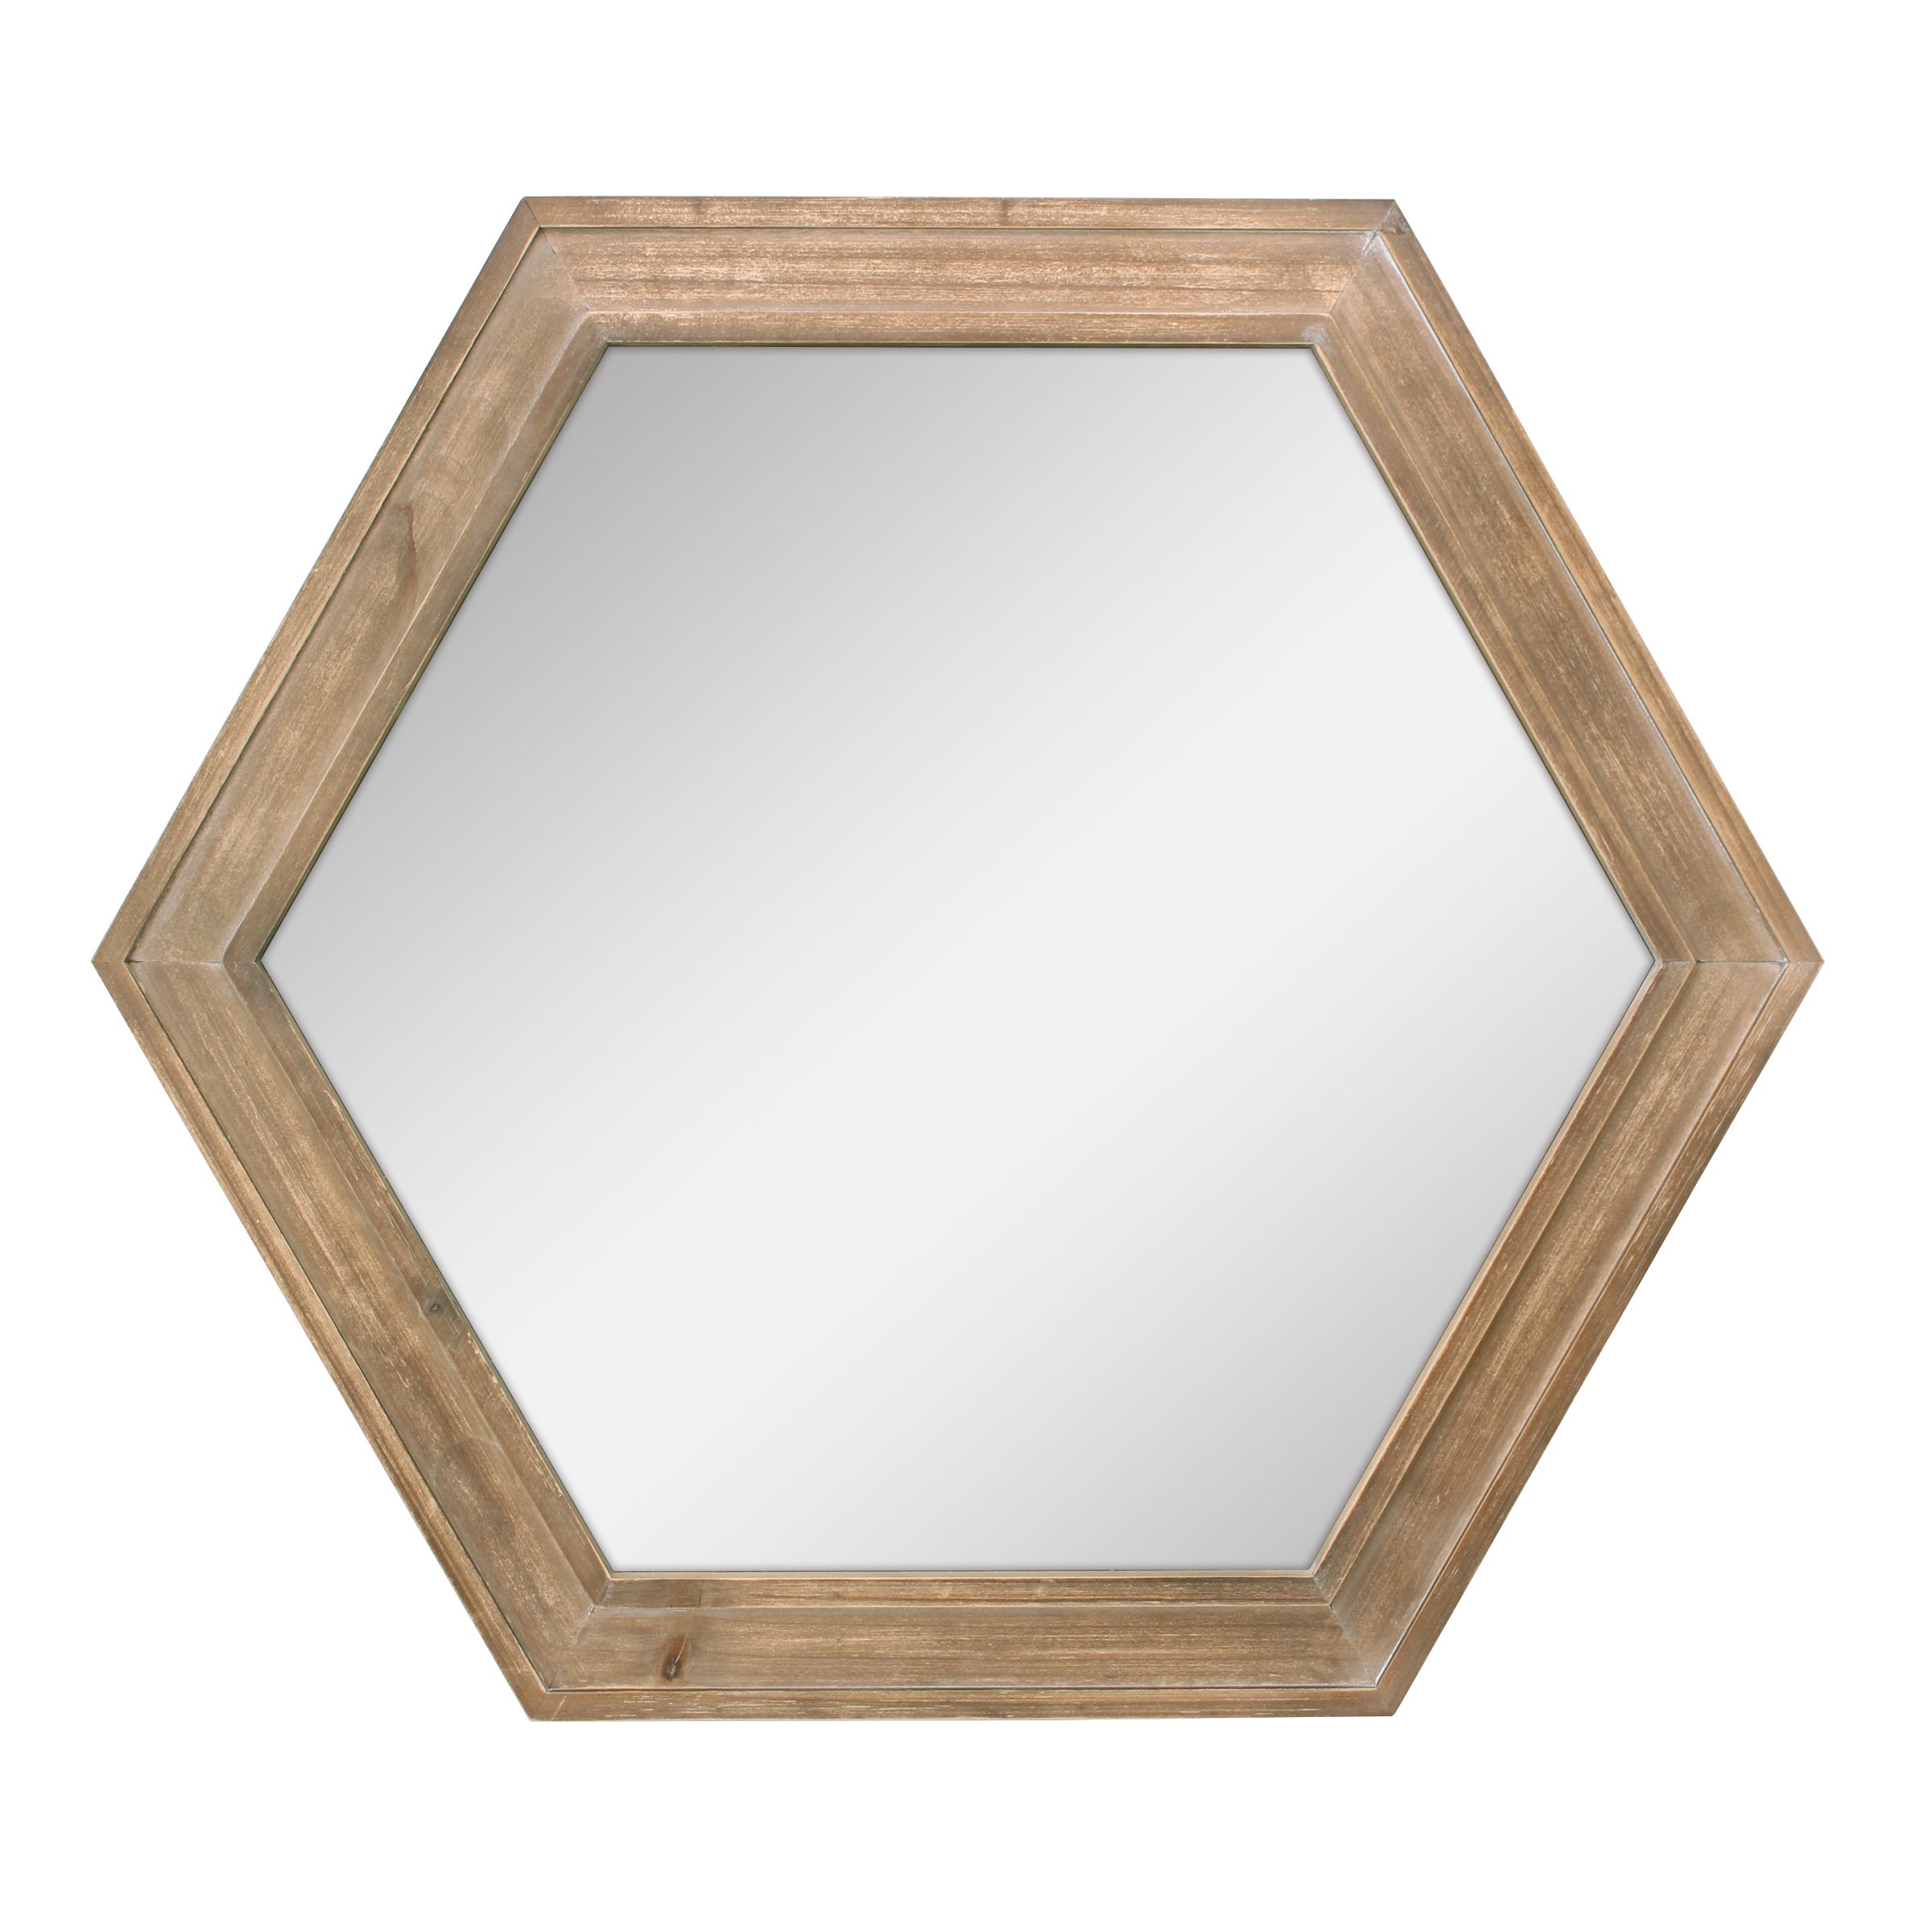 Hexagon Hanging Wall Mirror Natural Wood Frame Rustic Farmhouse Decor